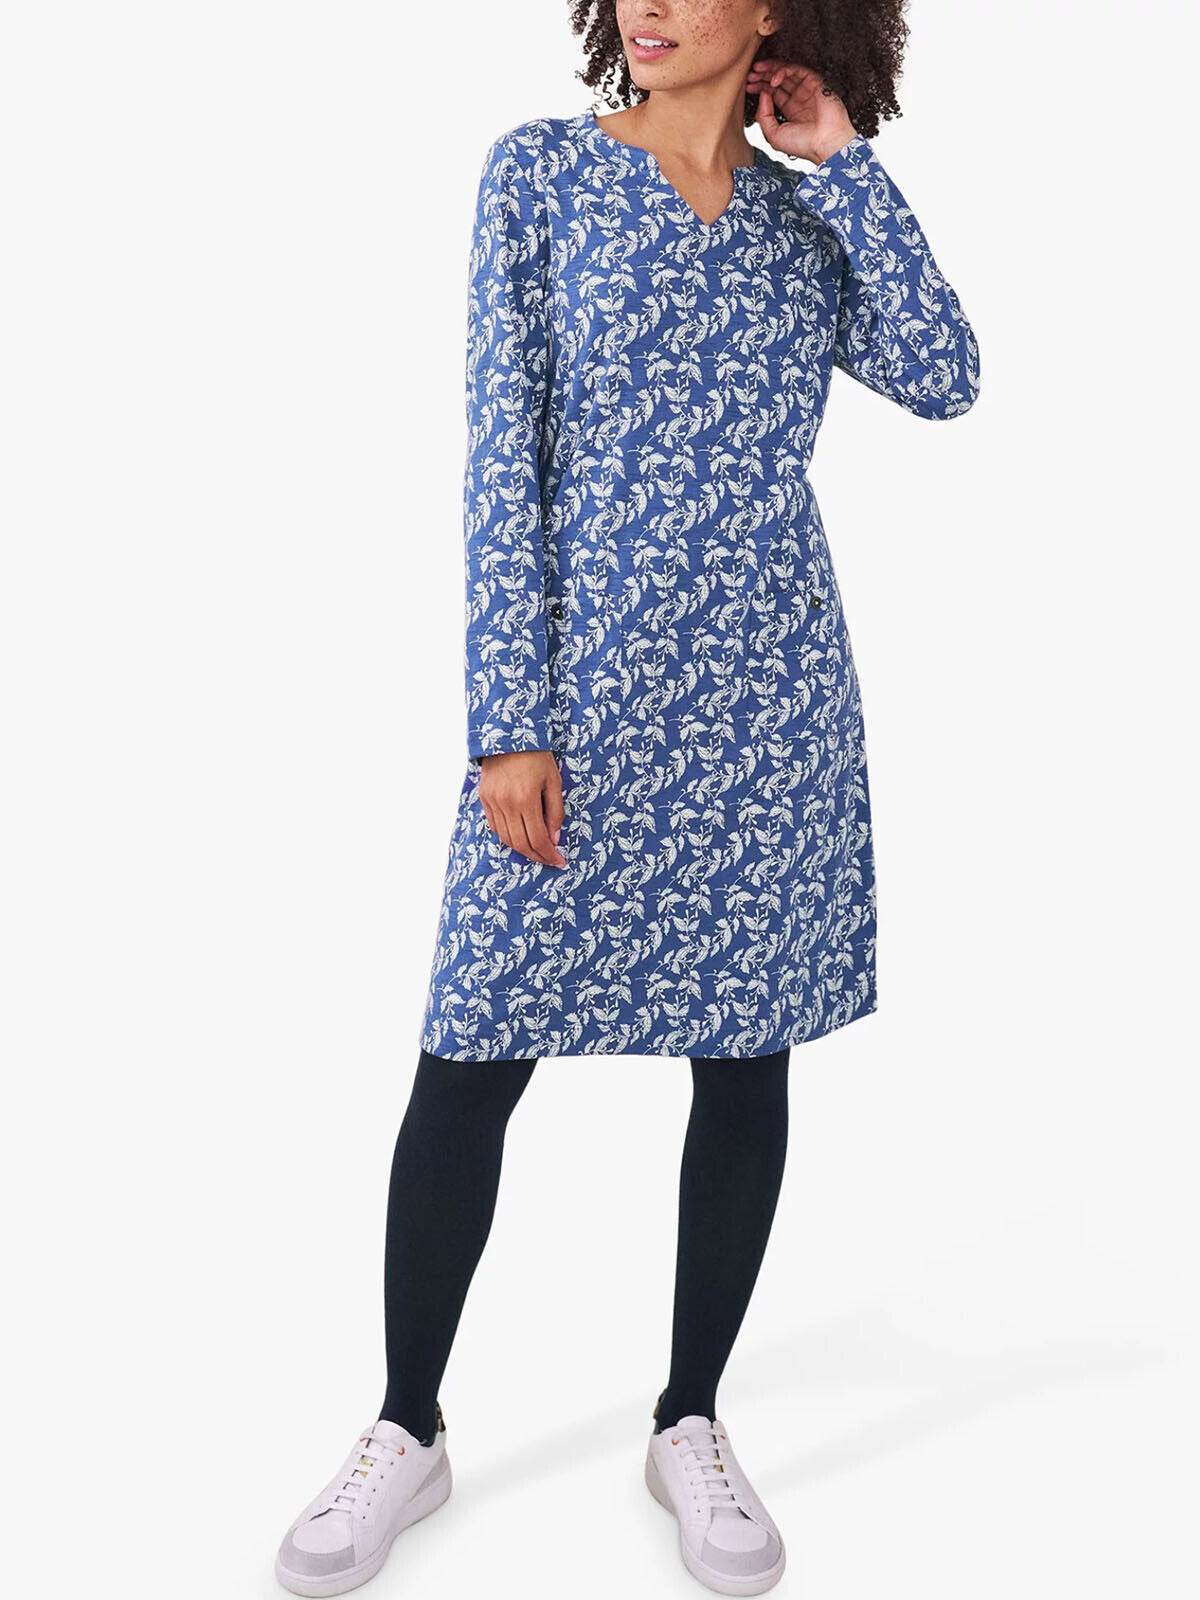 EX WHITE STUFF Blue Multi Bea Fairtrade Dress in Sizes 10, 12, 16, 20 RRP £55